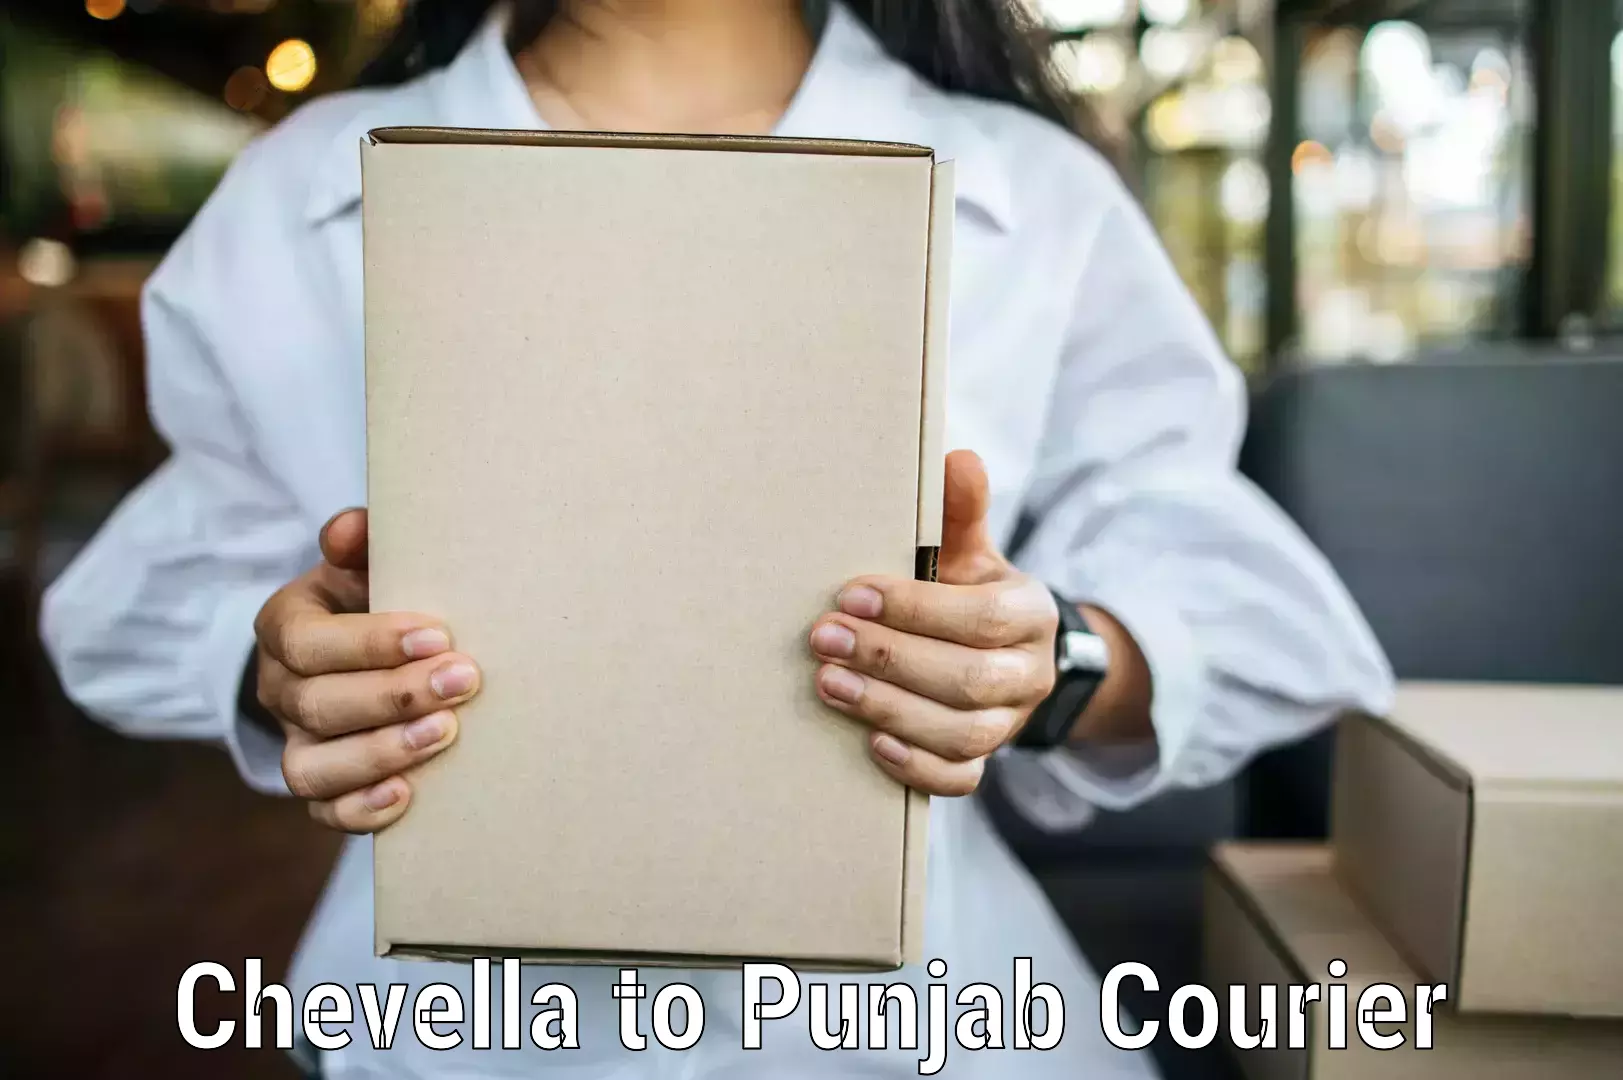 Multi-service courier options Chevella to Punjab